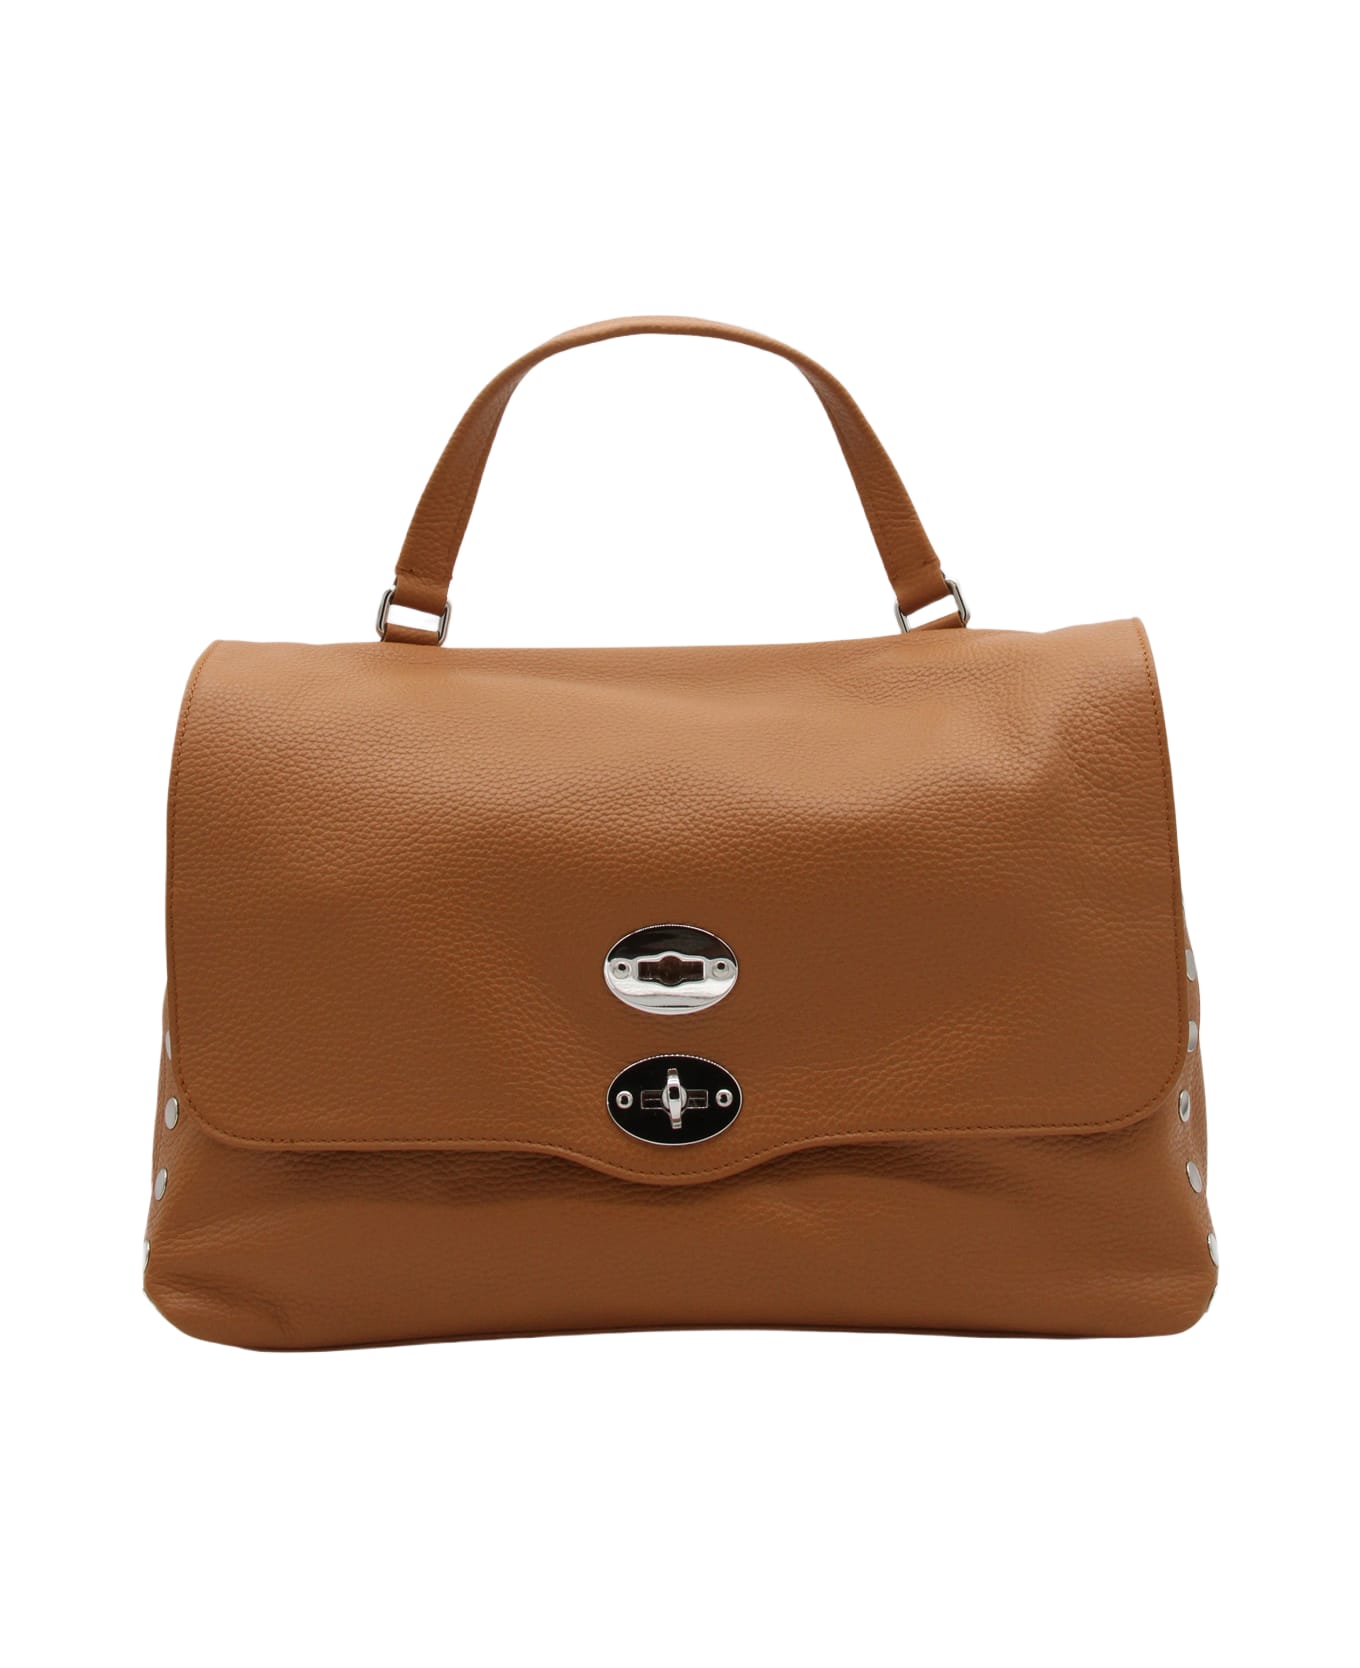 Zanellato Brown Leather Postina S Top Handle Bag - Brown